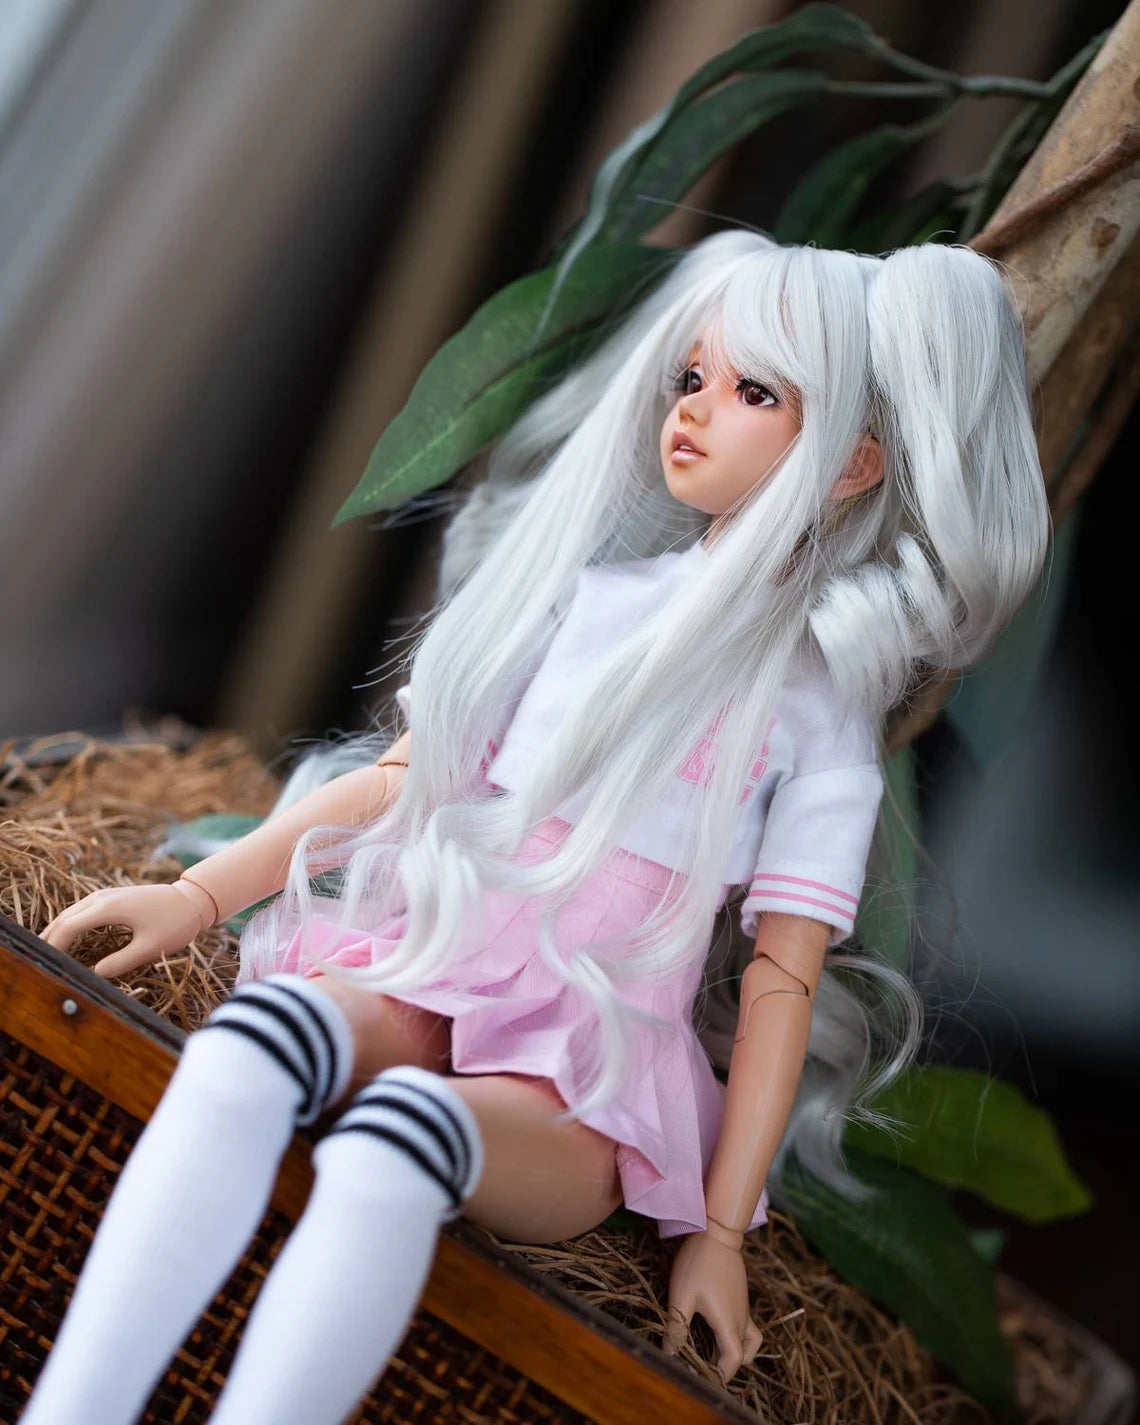 Custom doll Wig for Minifee Dolls- "TAN CAPS" 6-7" head size of Bjd, msd, Boneka ,Fairyland Minifee dolls anime limited